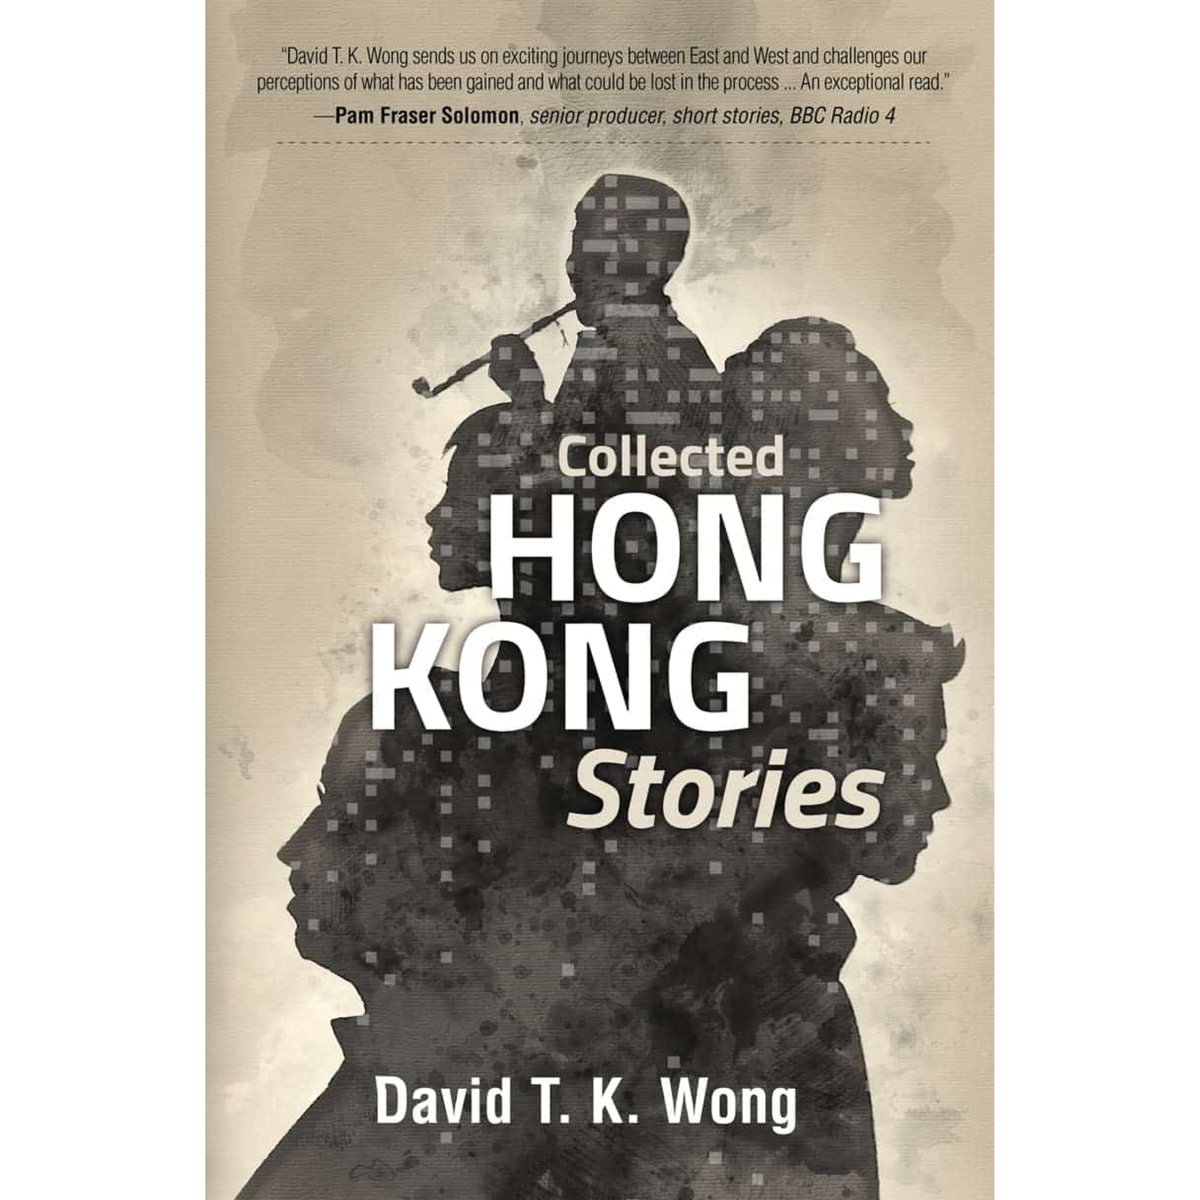 BOOK: Collected Hong Kong Stories